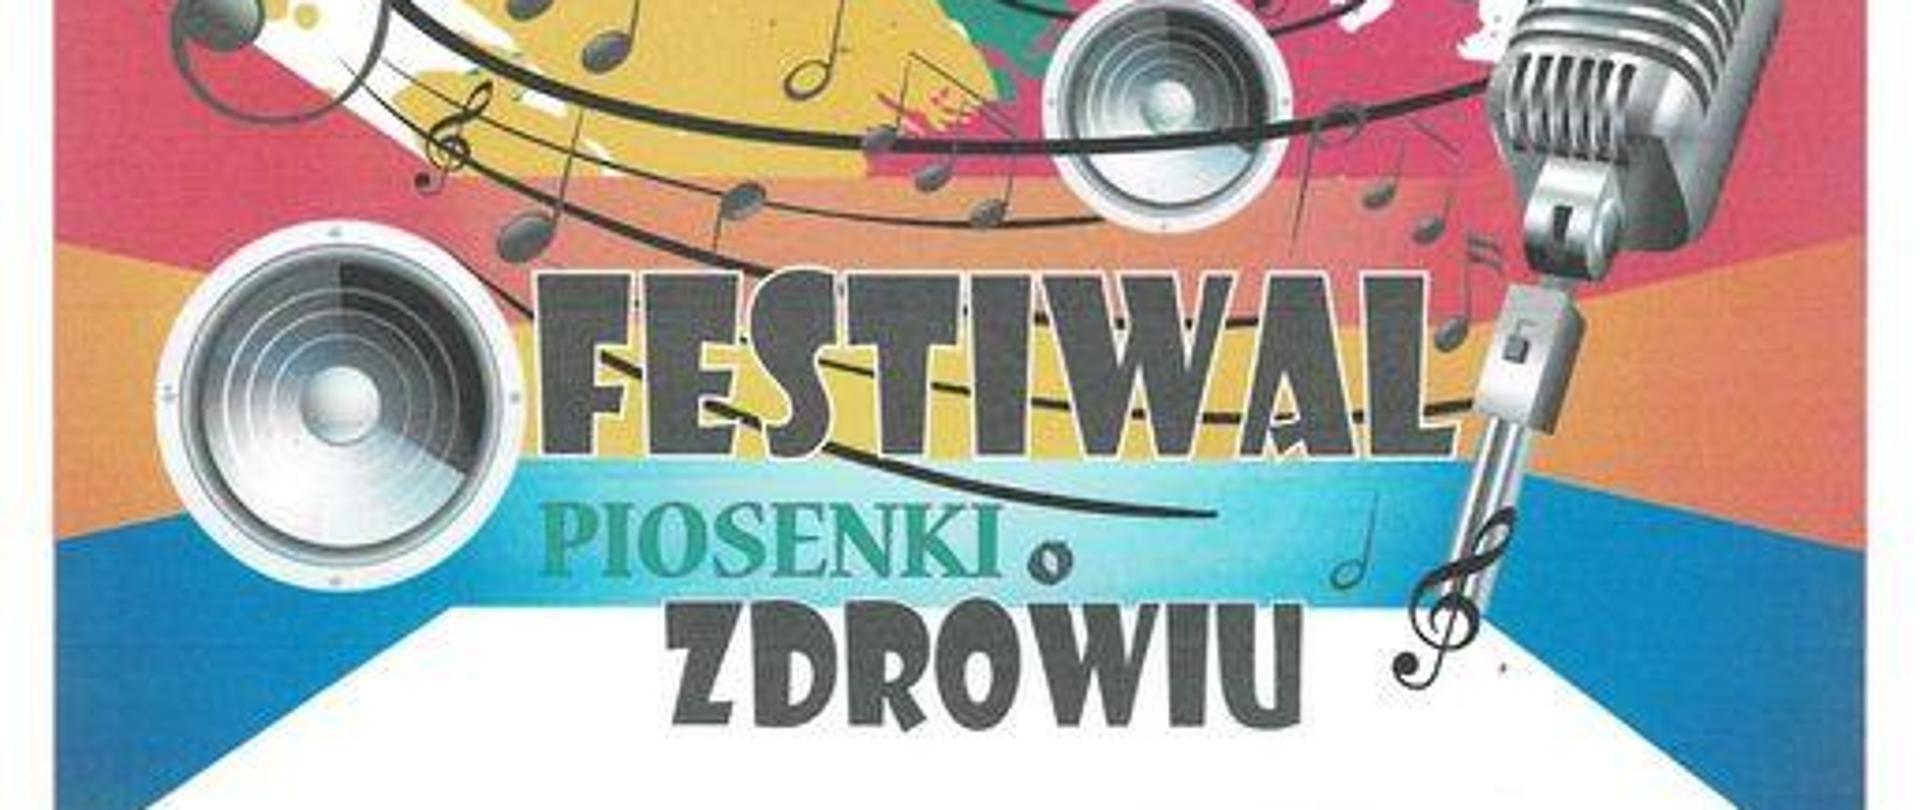 Festiwal Piosenki o Zdrowiu 2024